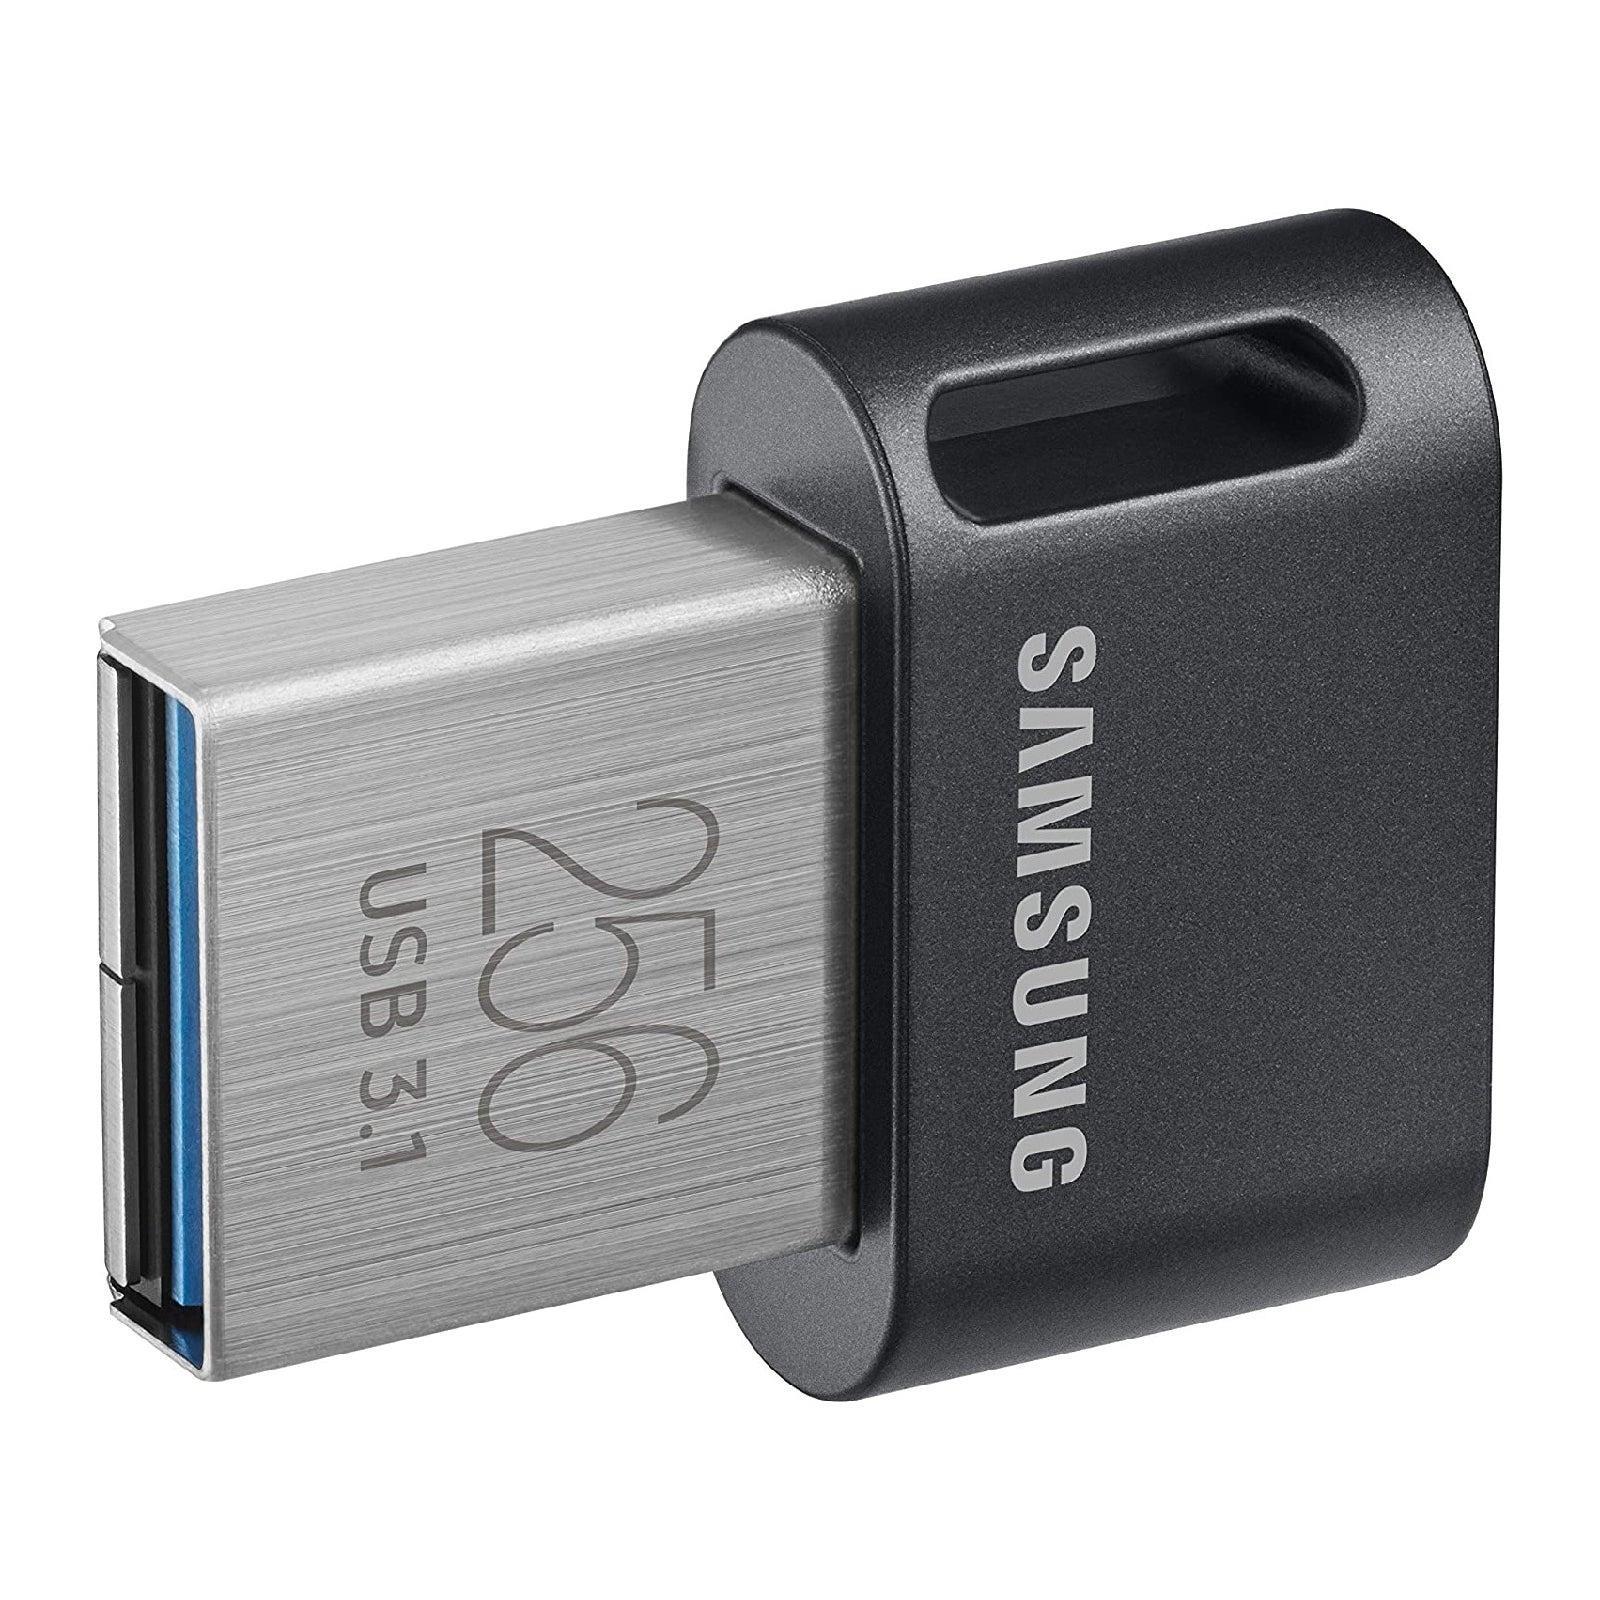 Samsung Fit Plus 256GB USB 3.1 Flash Drive 200MB/S Memory Stick Pen Drive Laptop